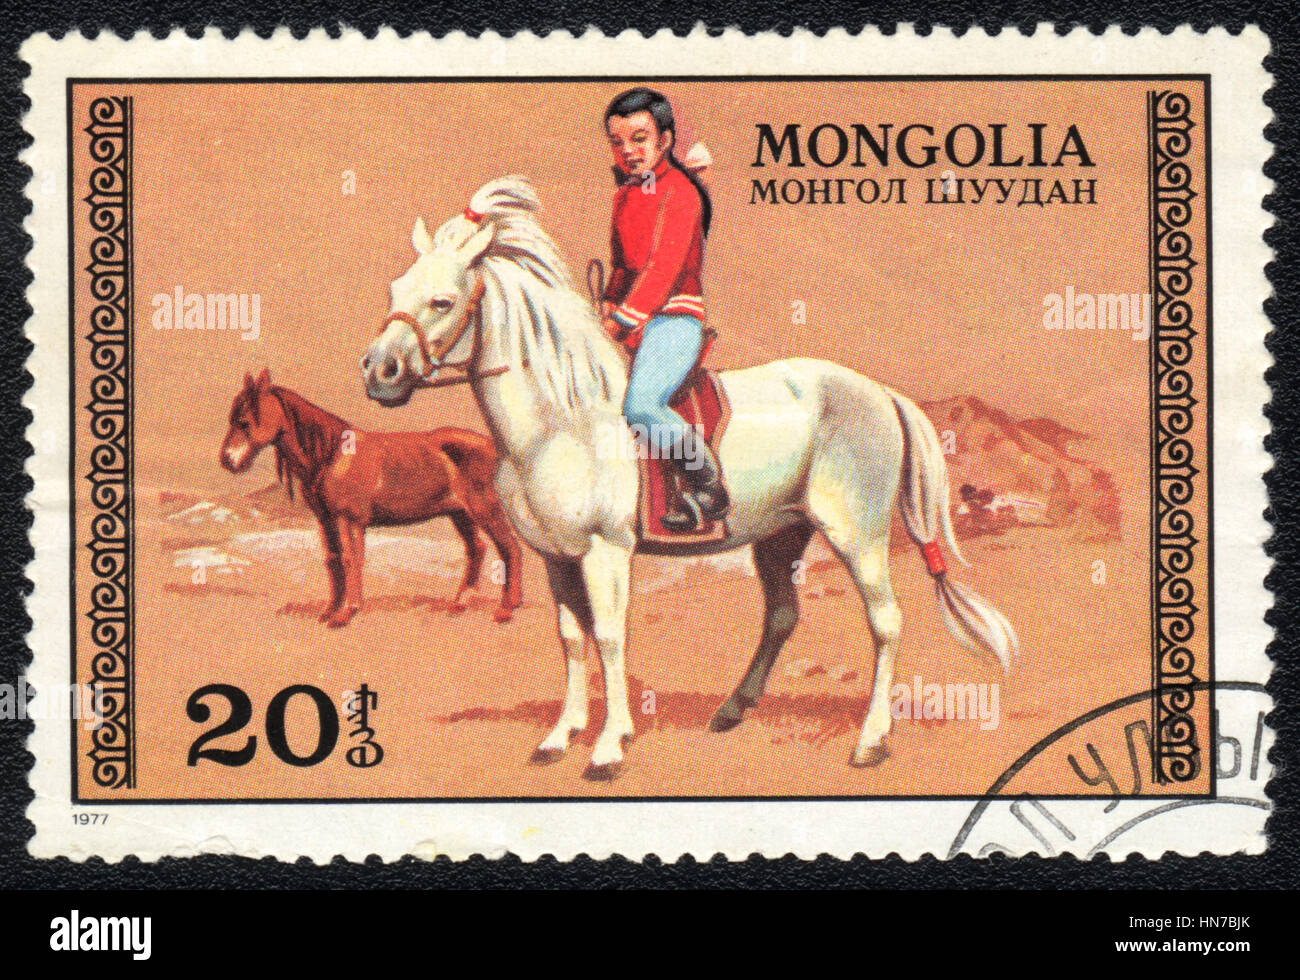 1098:: 8 Animal Stamps, 1950s, Horses: Australia, Sweden, Mongolia,  Uruguay, Netherlands